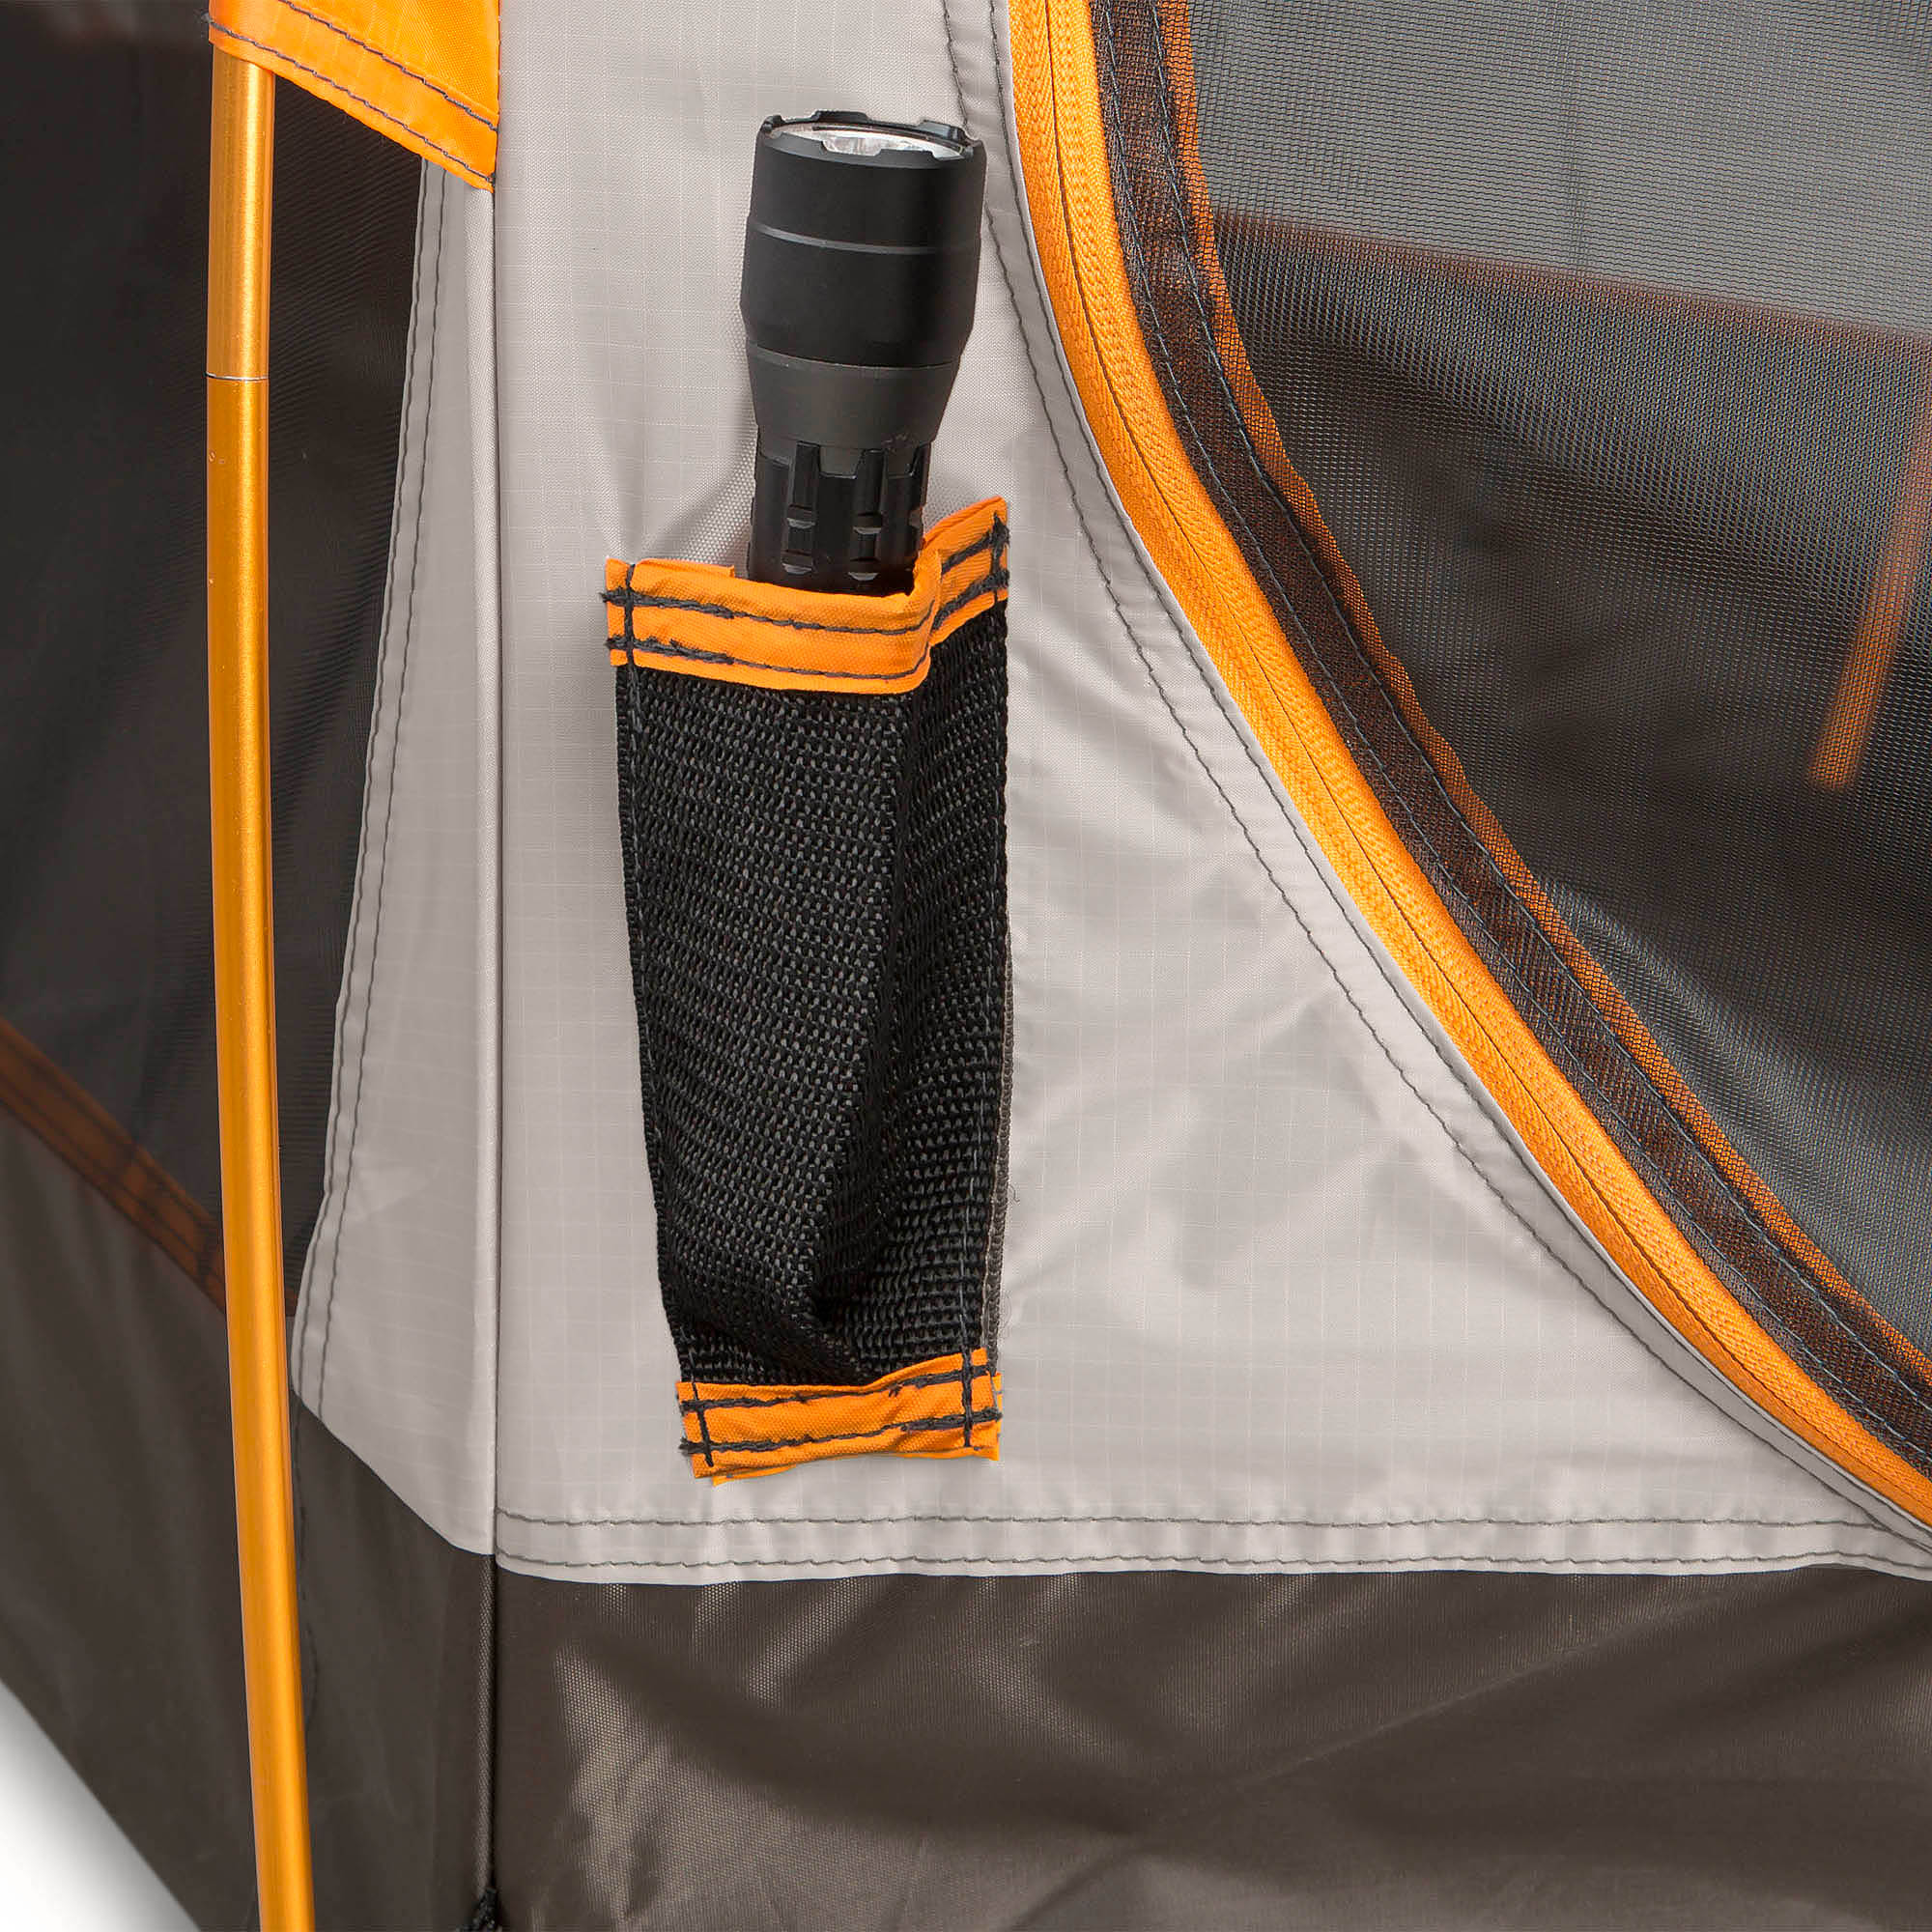 Bushnell Roam Series 8.5' x 3' Backpacking Tent, Sleeps 1 - image 5 of 6